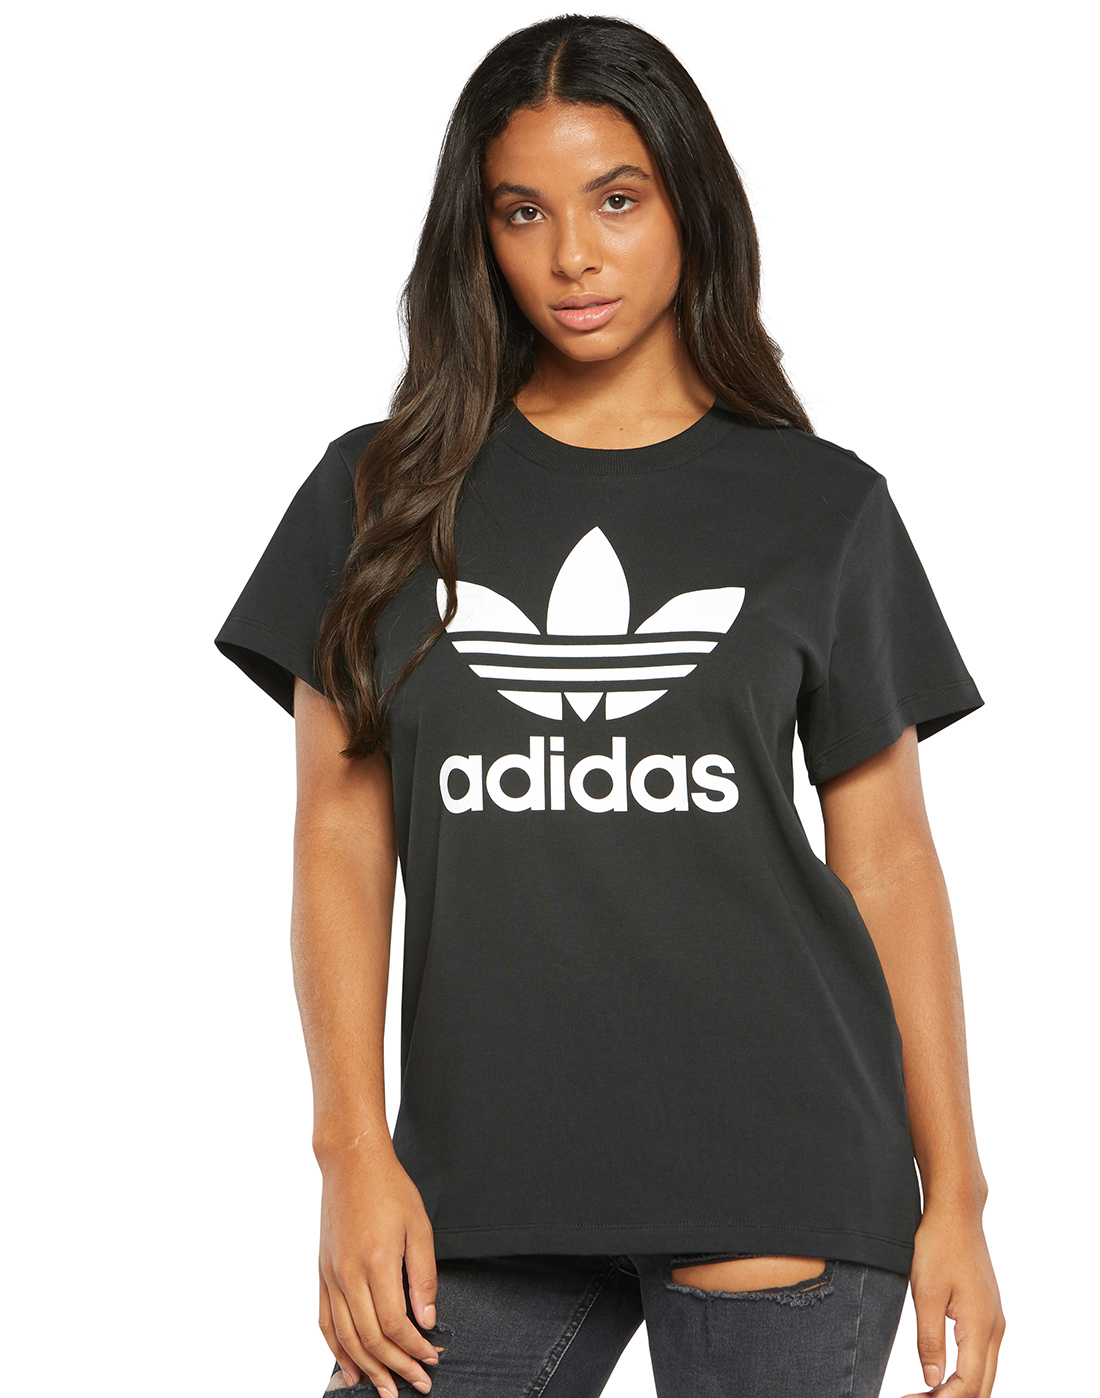 adidas Originals Womens Trefoil Boyfriend T-Shirt - Black | Life Style ...